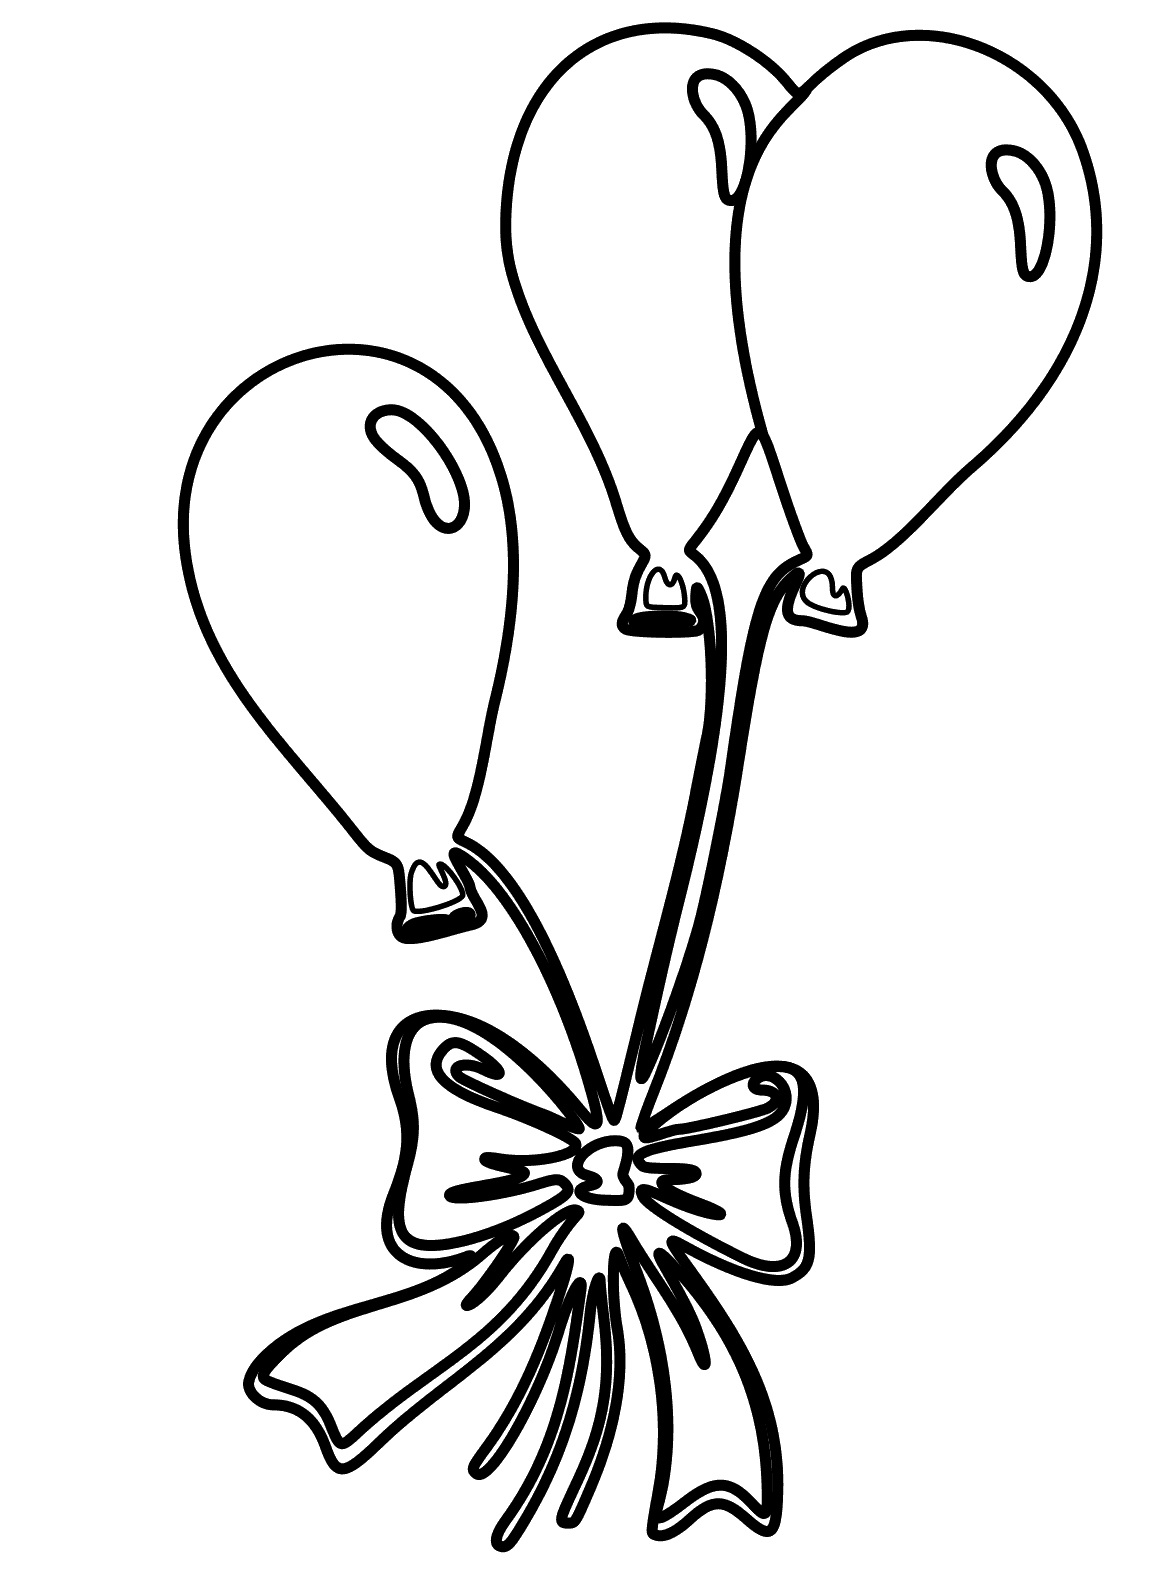 Gift of Balloons